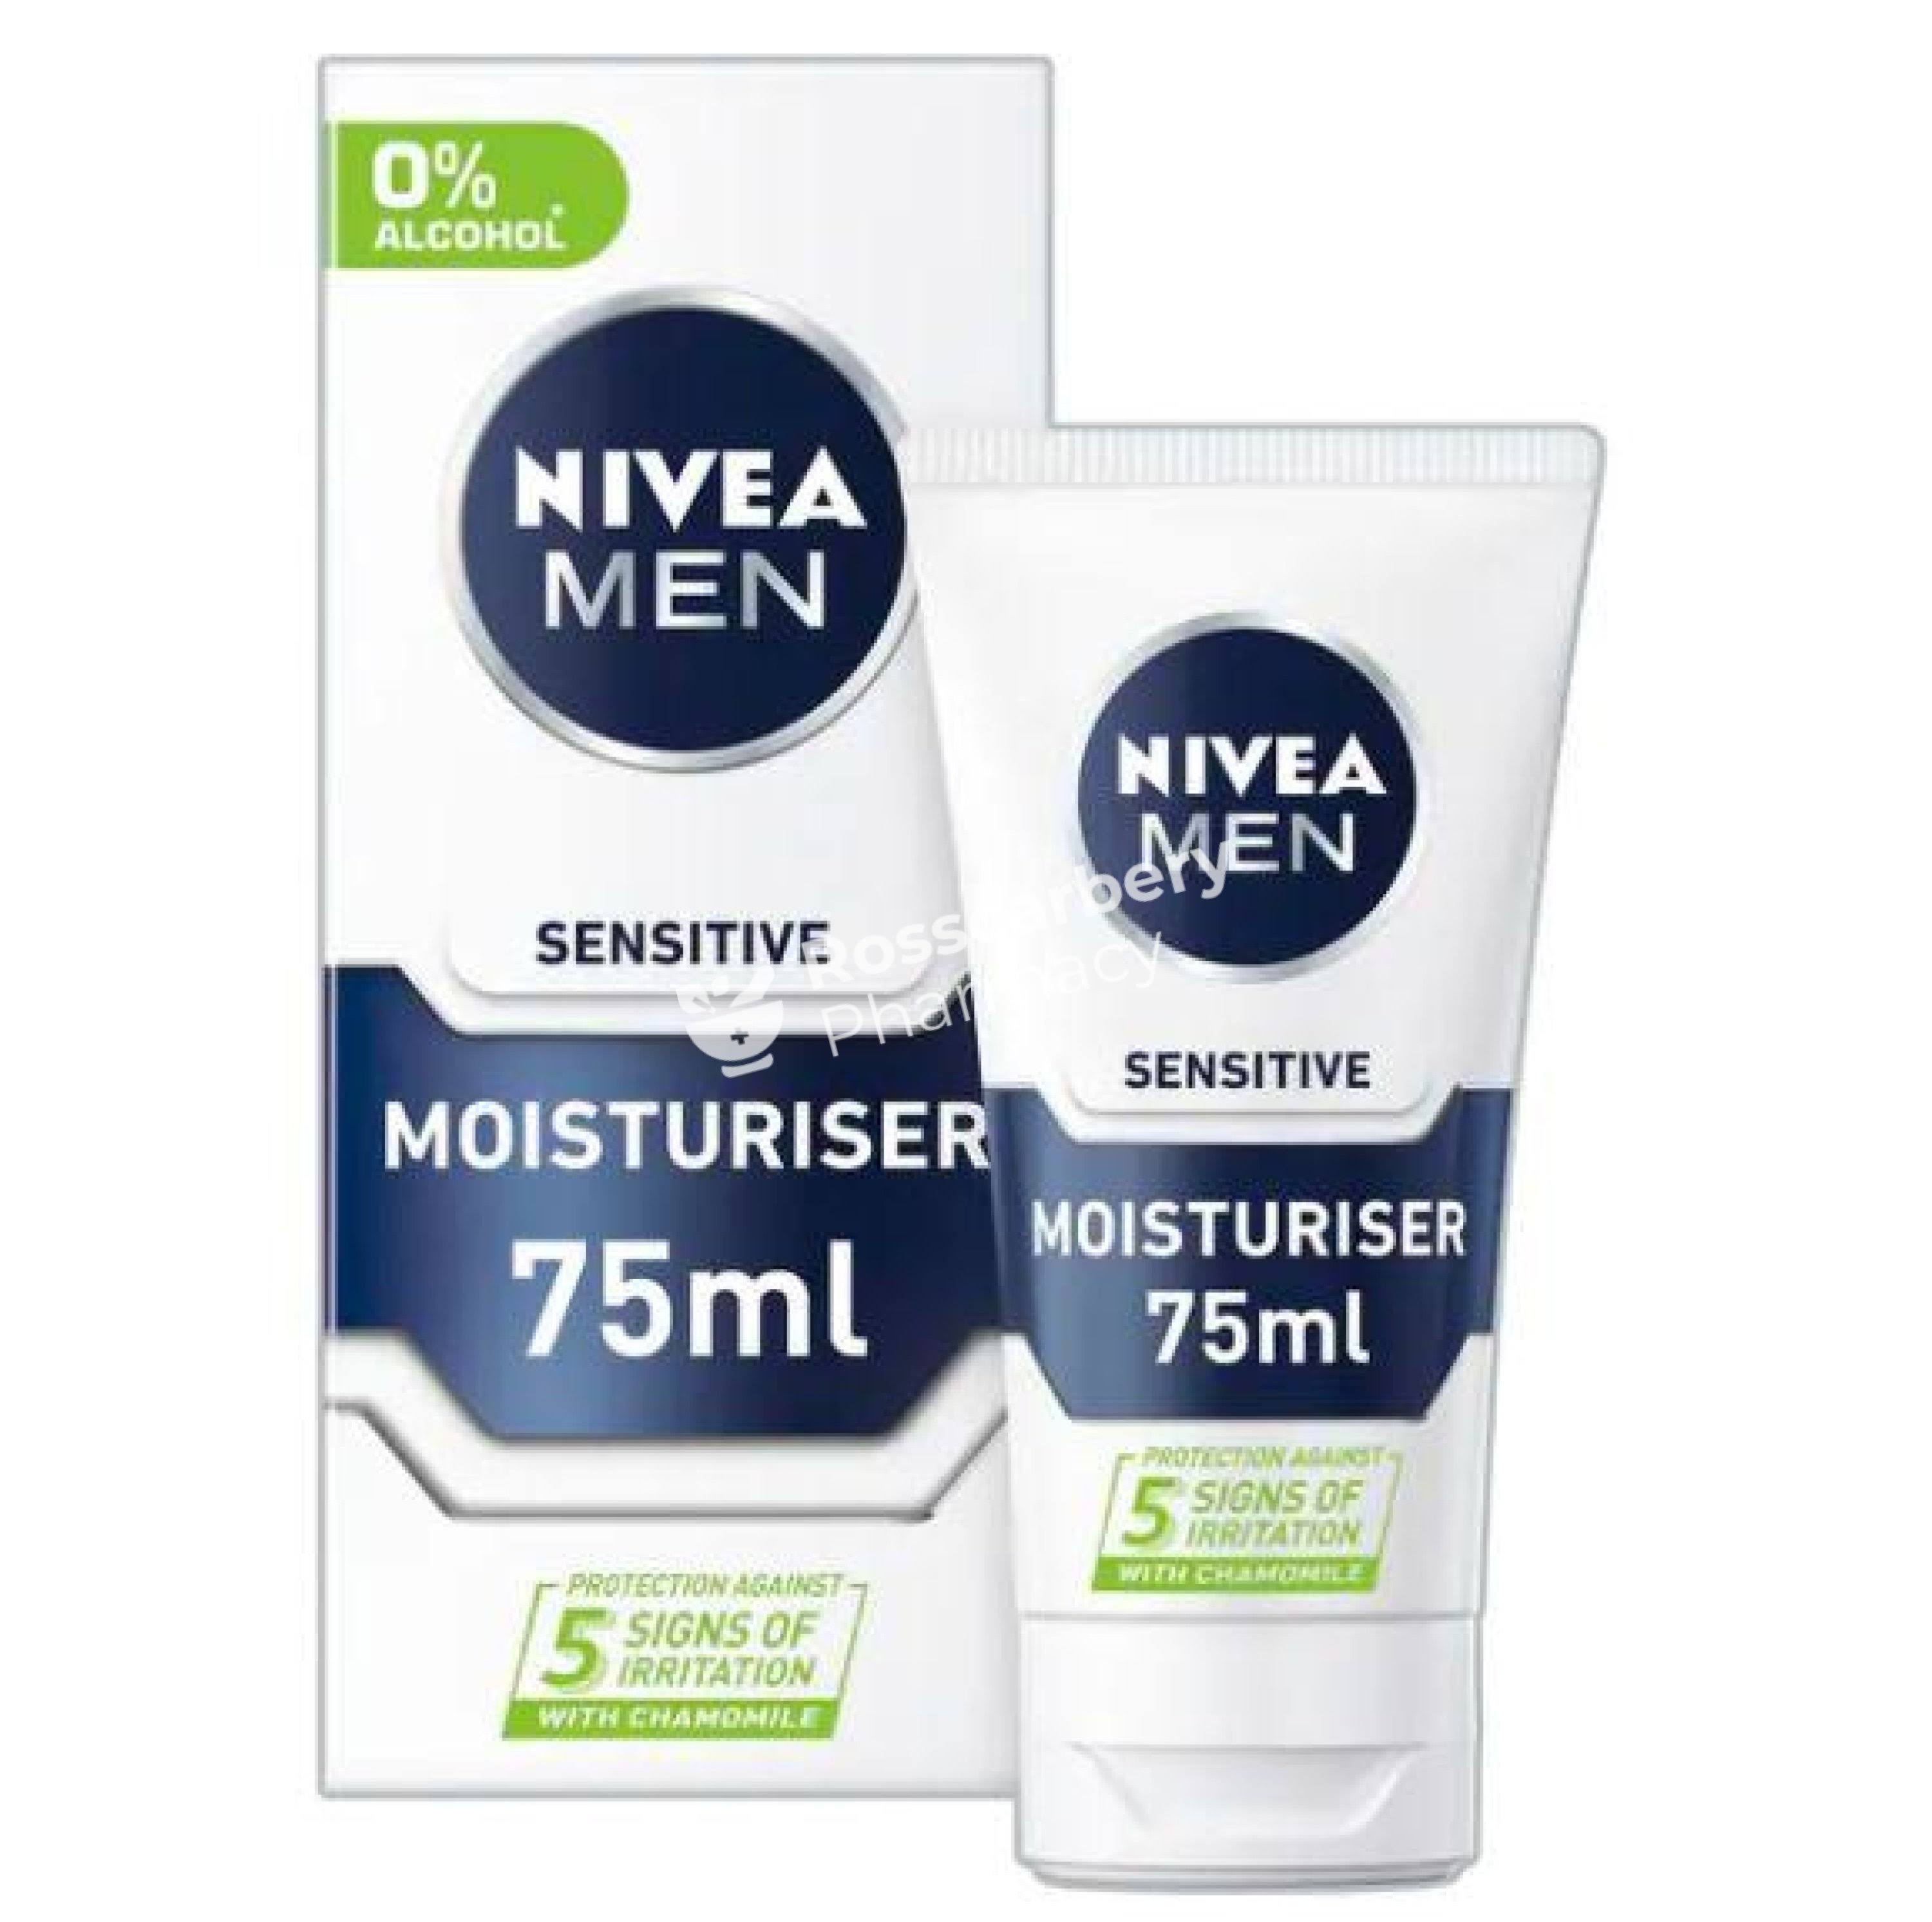 Nivea Men Moisturiser - Sensitive, 75ml